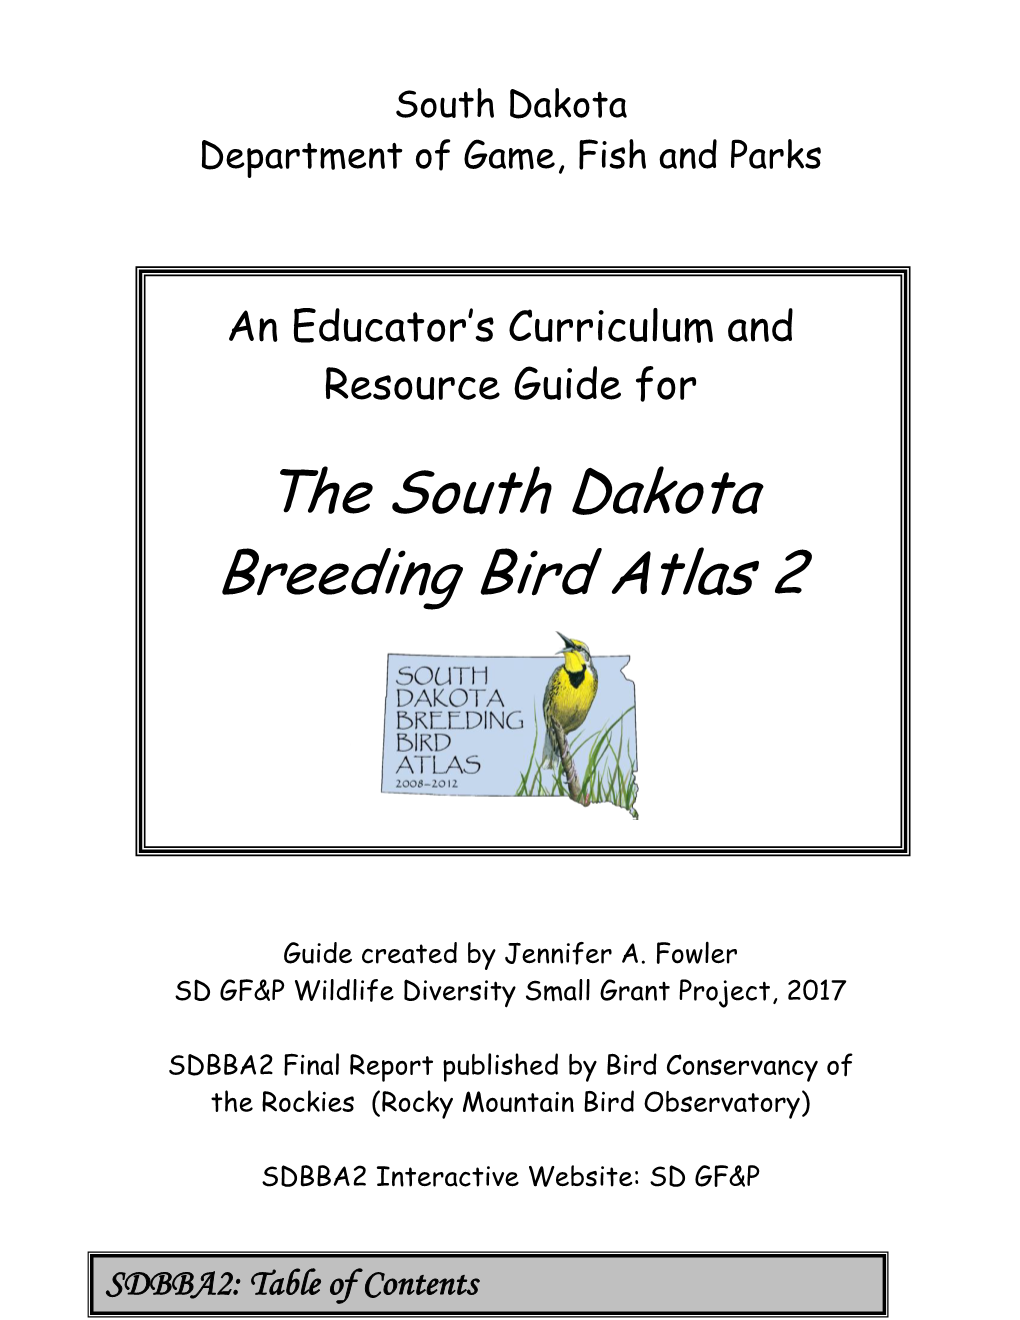 The South Dakota Breeding Bird Atlas 2